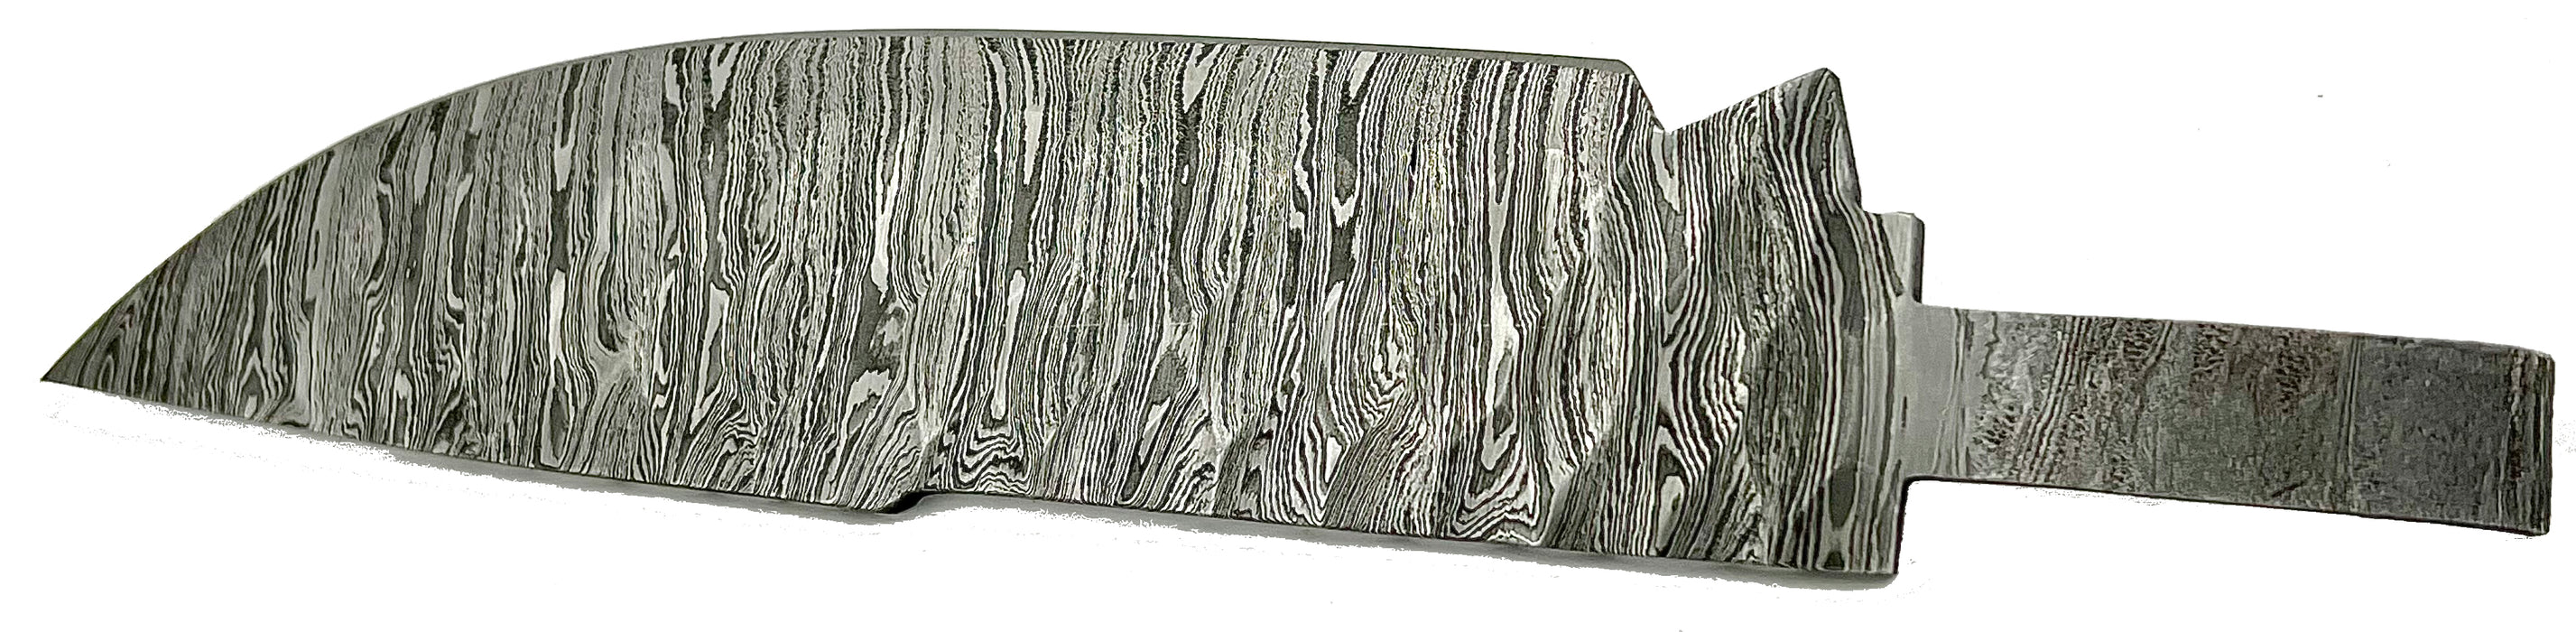 Arrowhead Textured 1095 15N20 high carbon steel Damascus Full Tang Blank